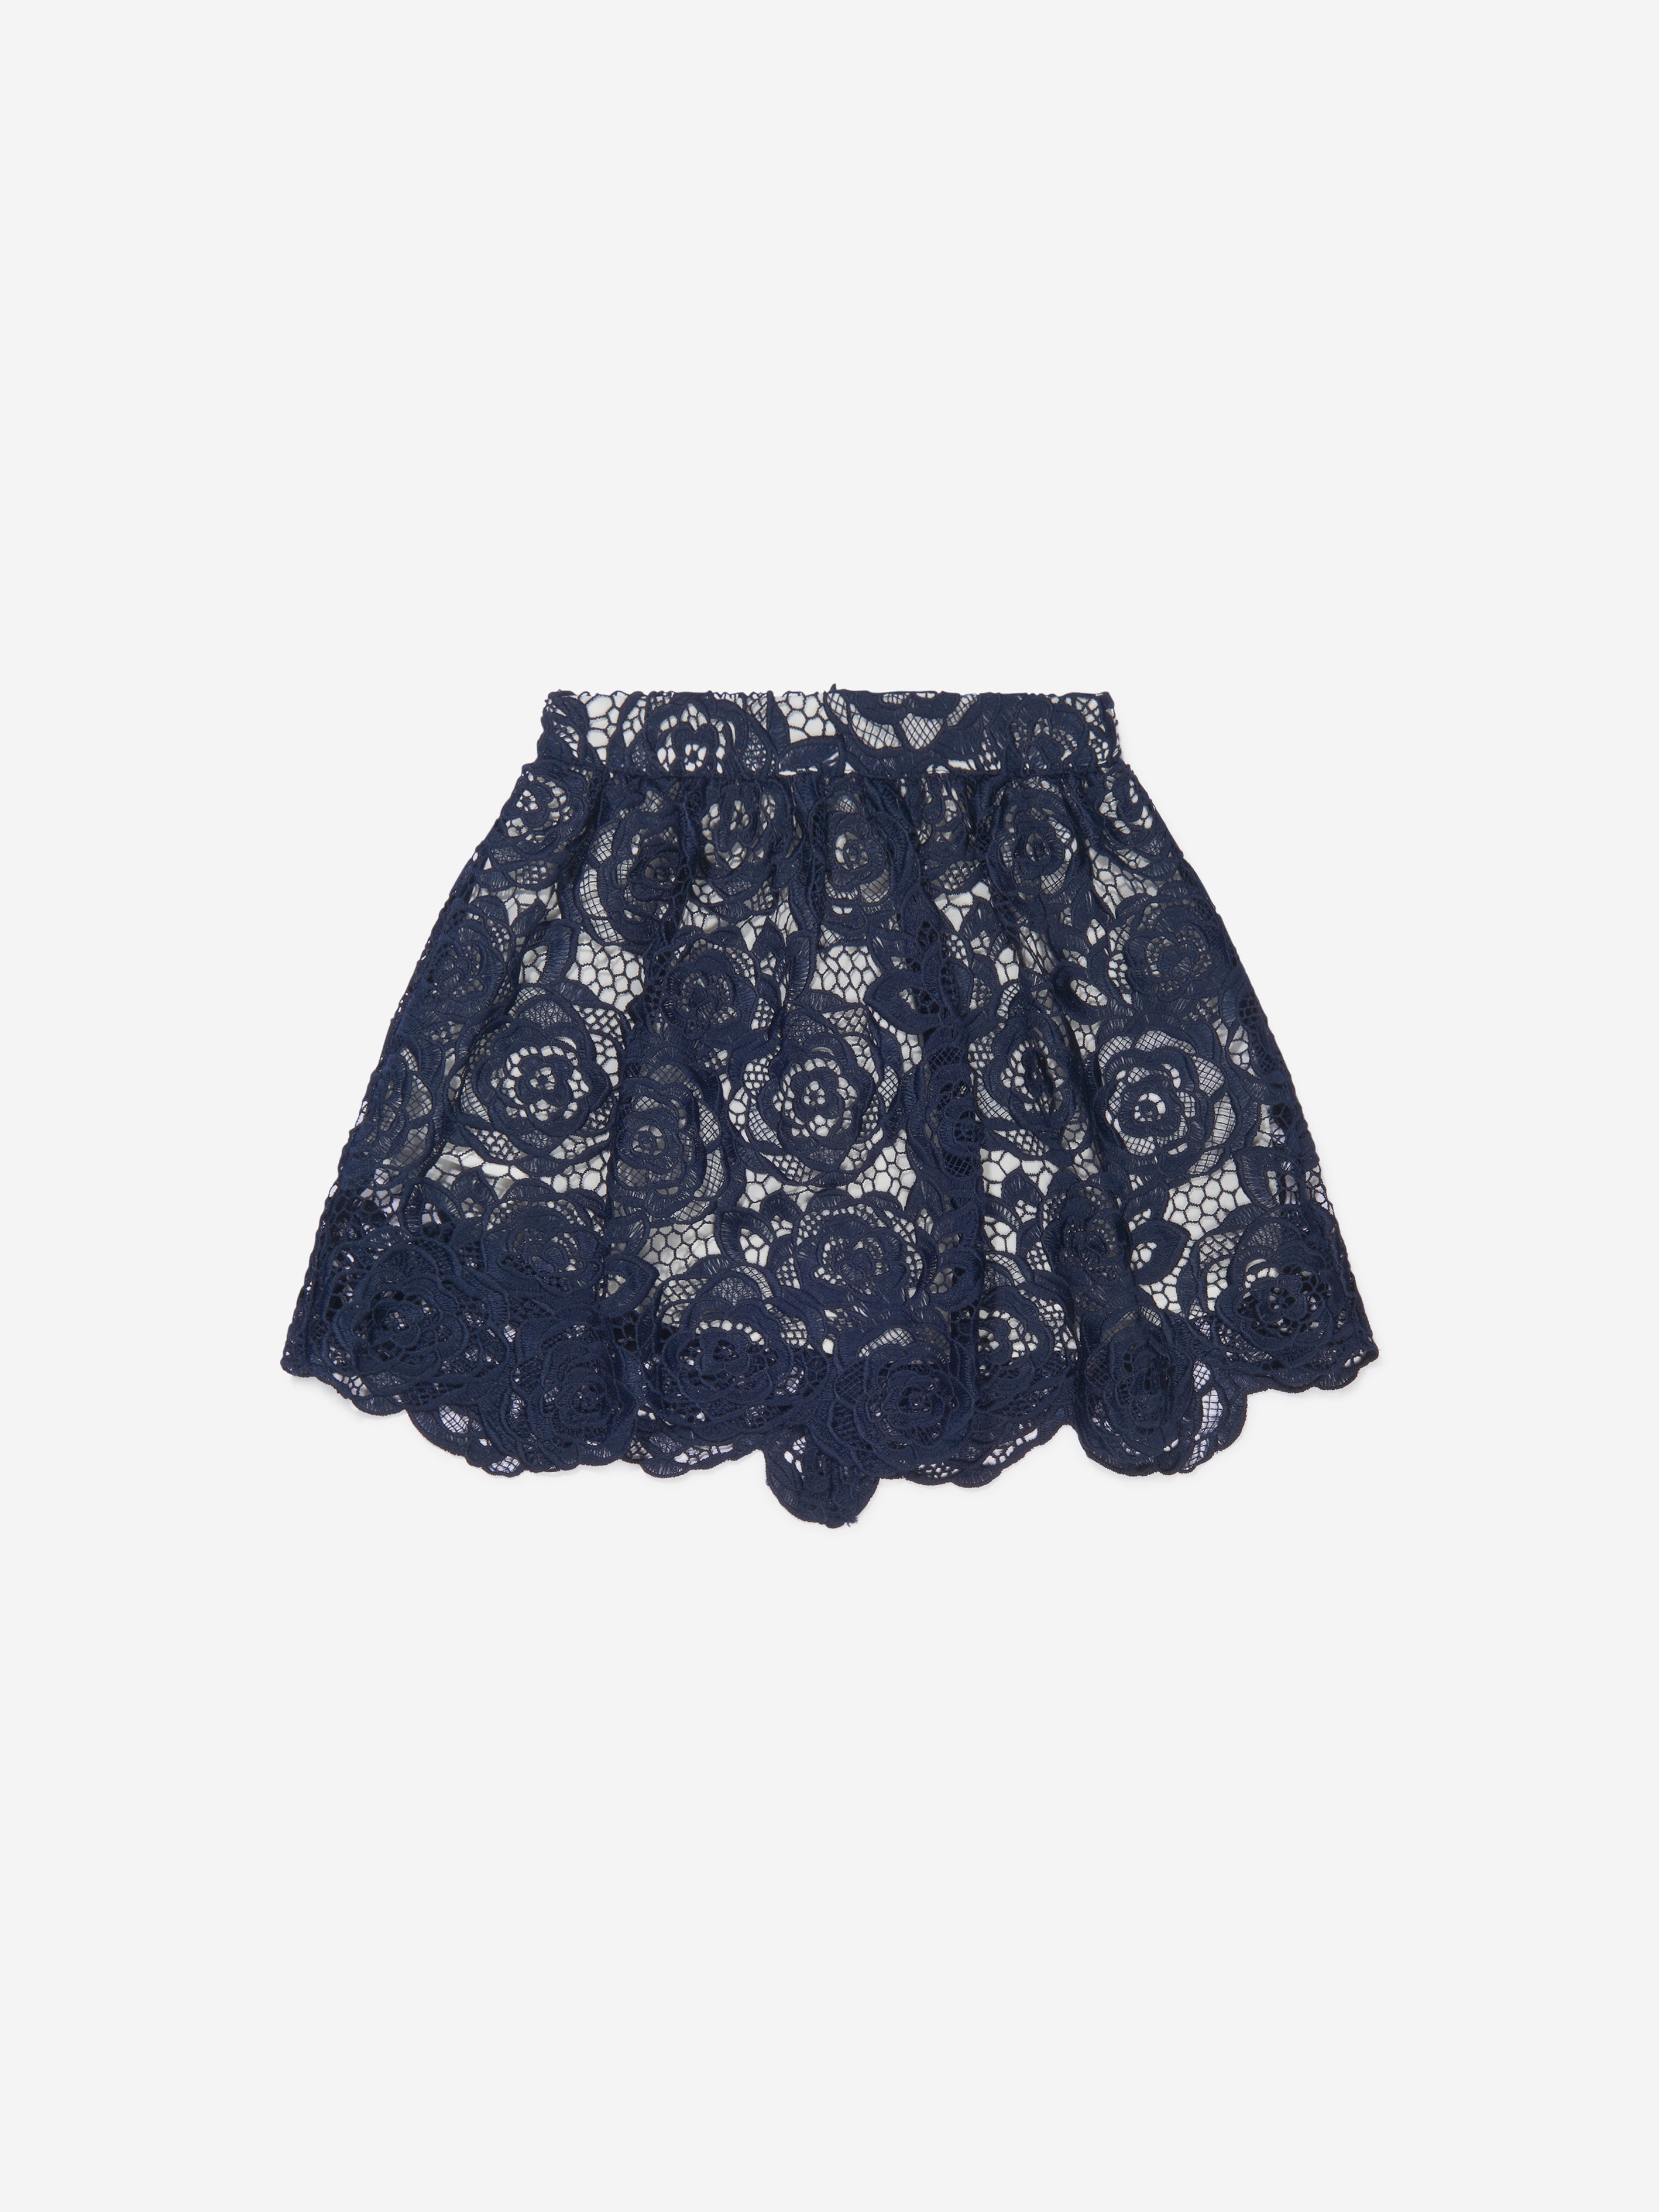 Charabia Kids' Girls Lace Flower Skirt 8 Yrs Blue